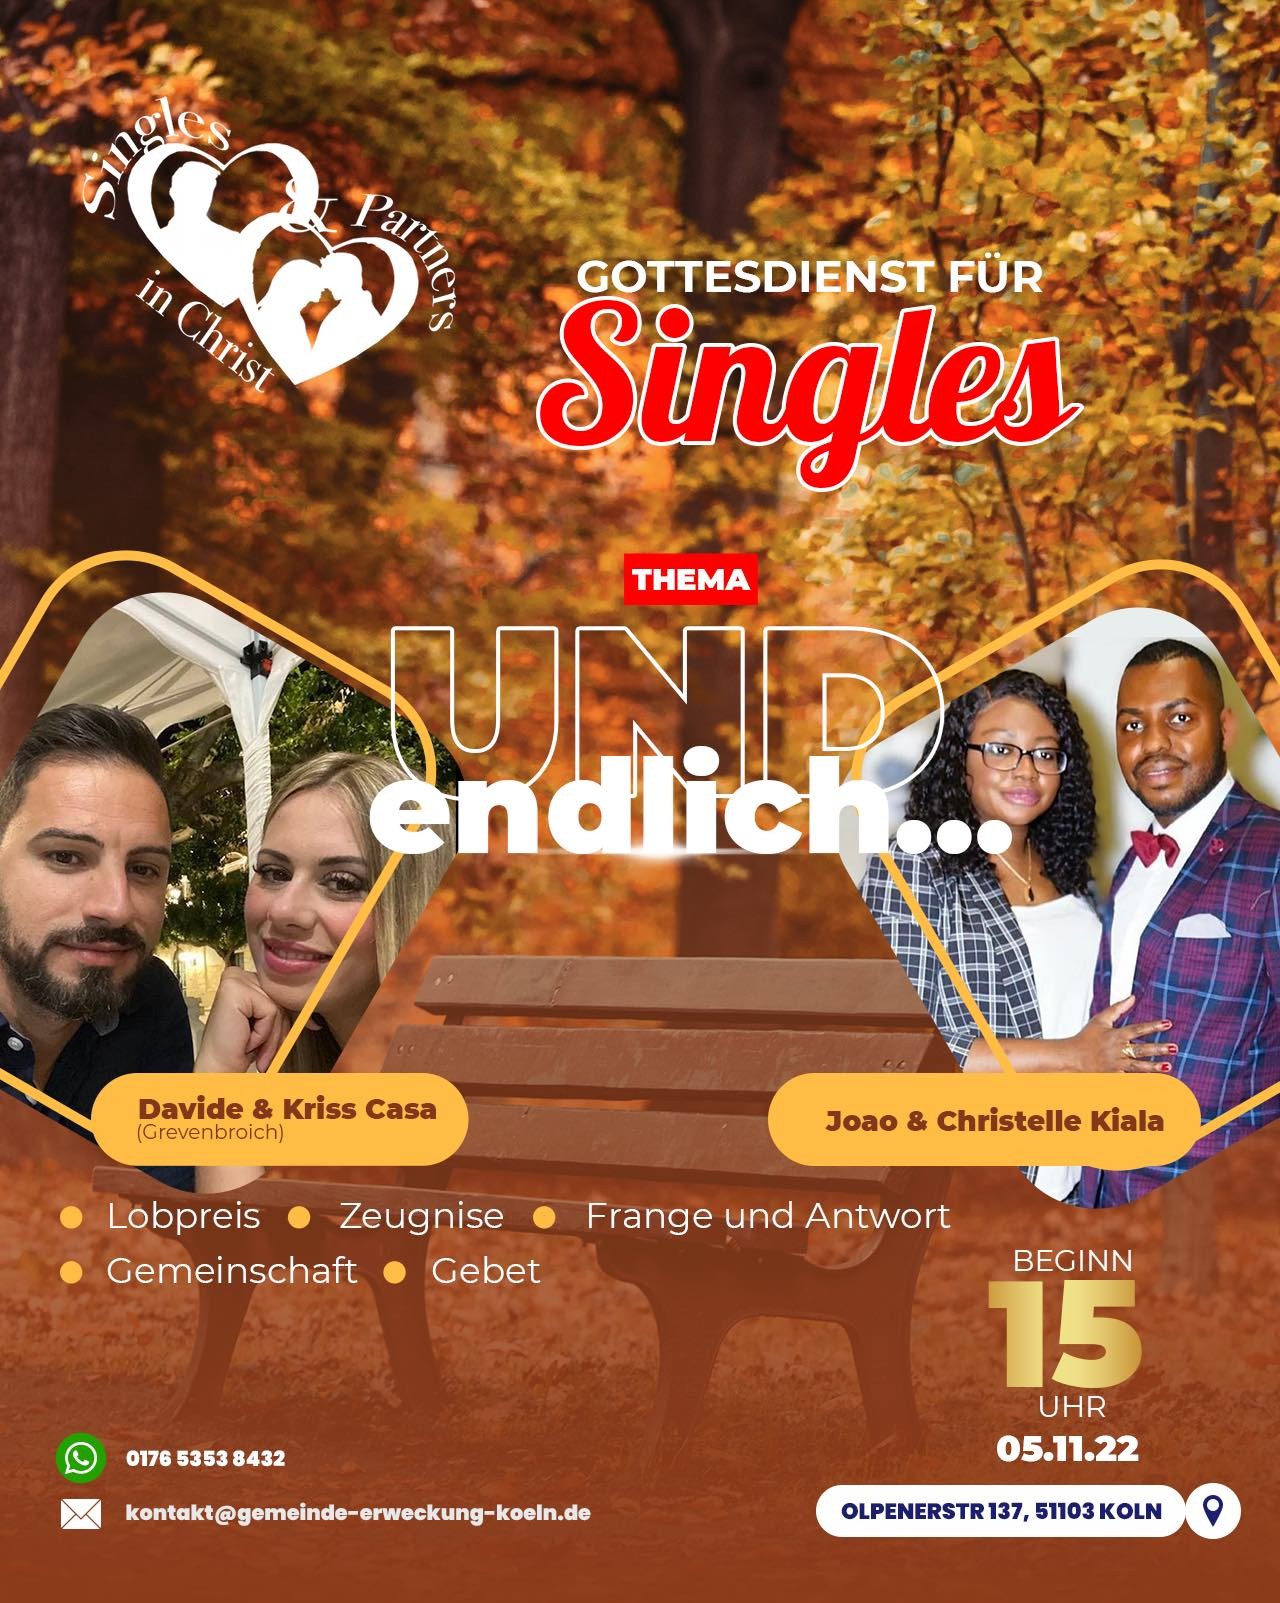 Singles in Christ